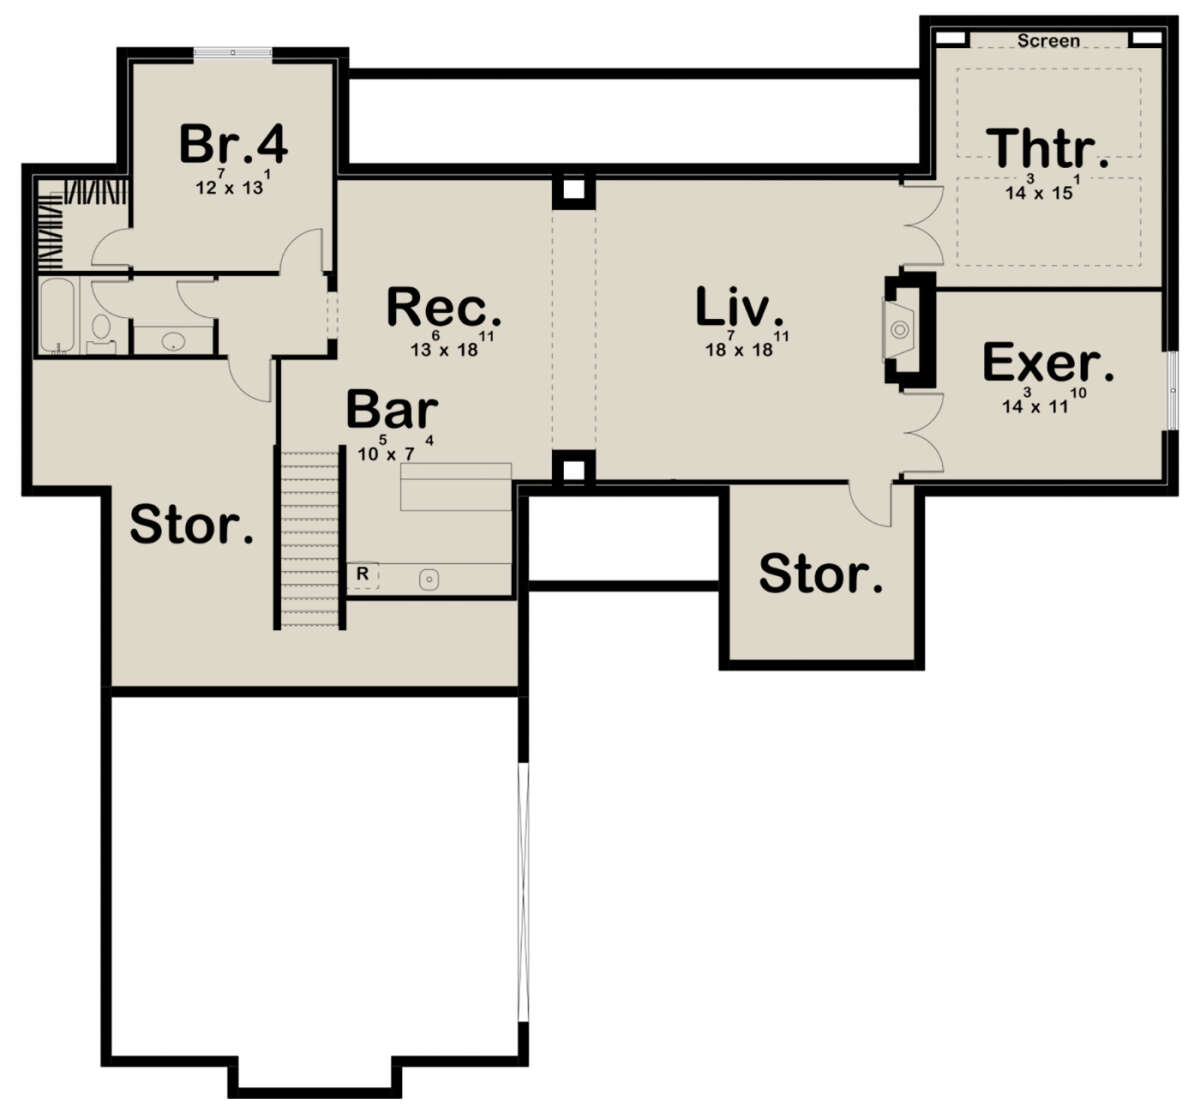 Modern Farmhouse Plan: 2,278 Square Feet, 3 Bedrooms, 2.5 Bathrooms ...